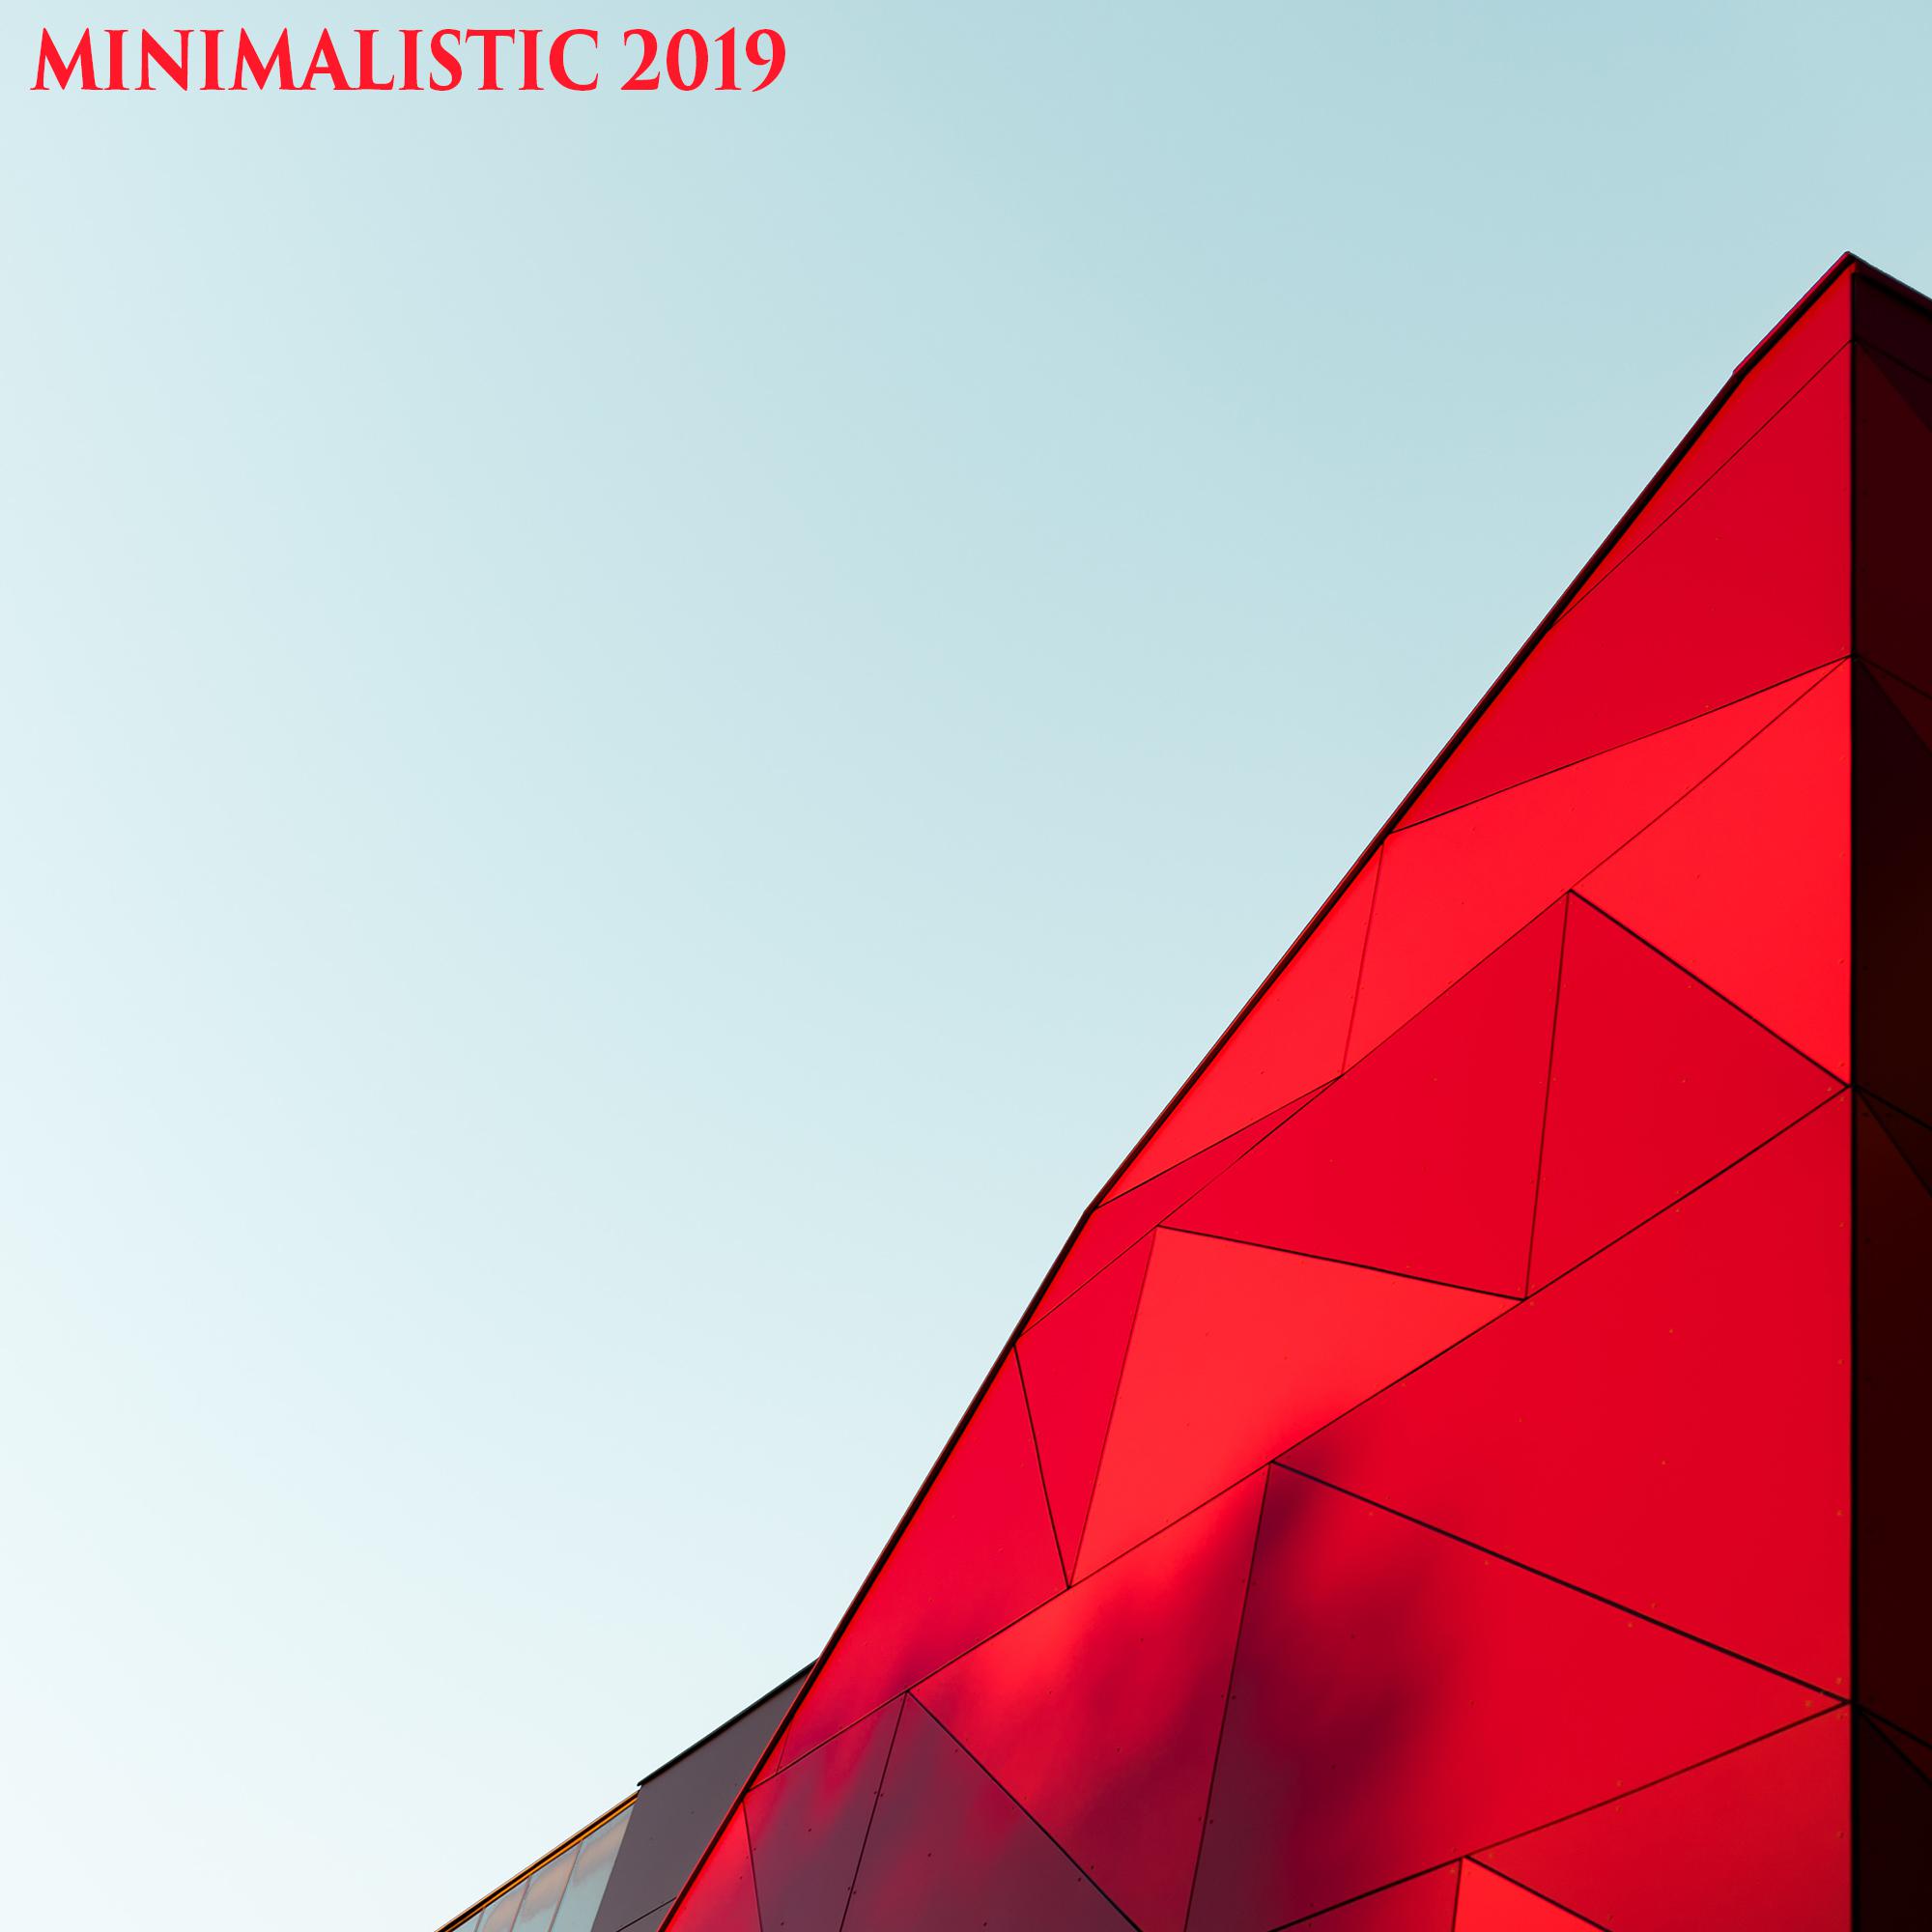 Minimalistic 2019